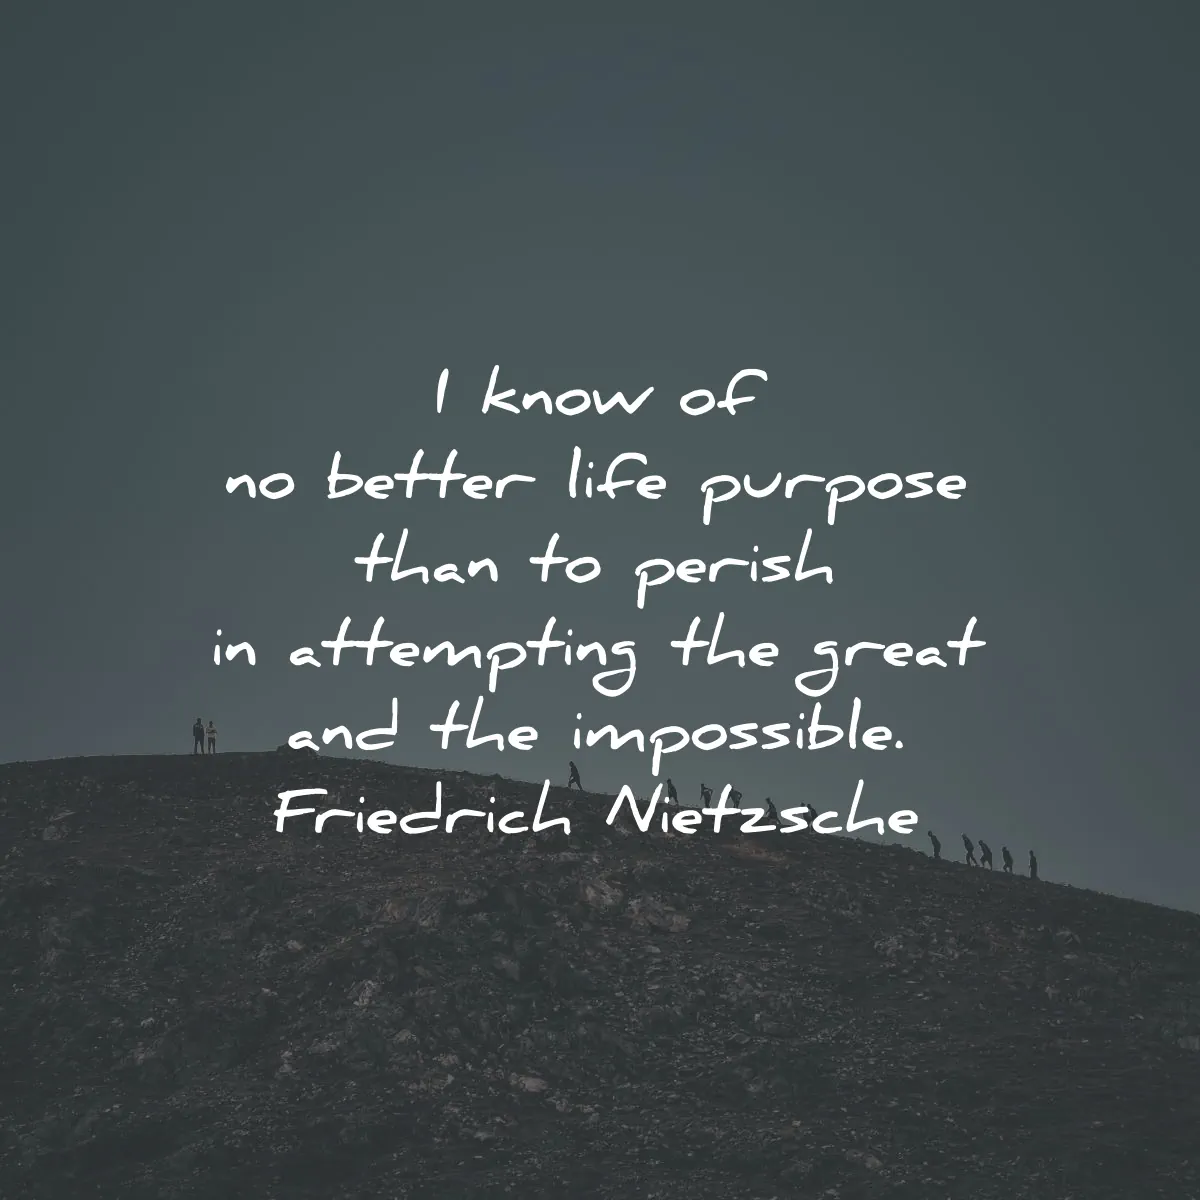 friedrich nietzsche quotes know life purpose perish attempting impossible wisdom